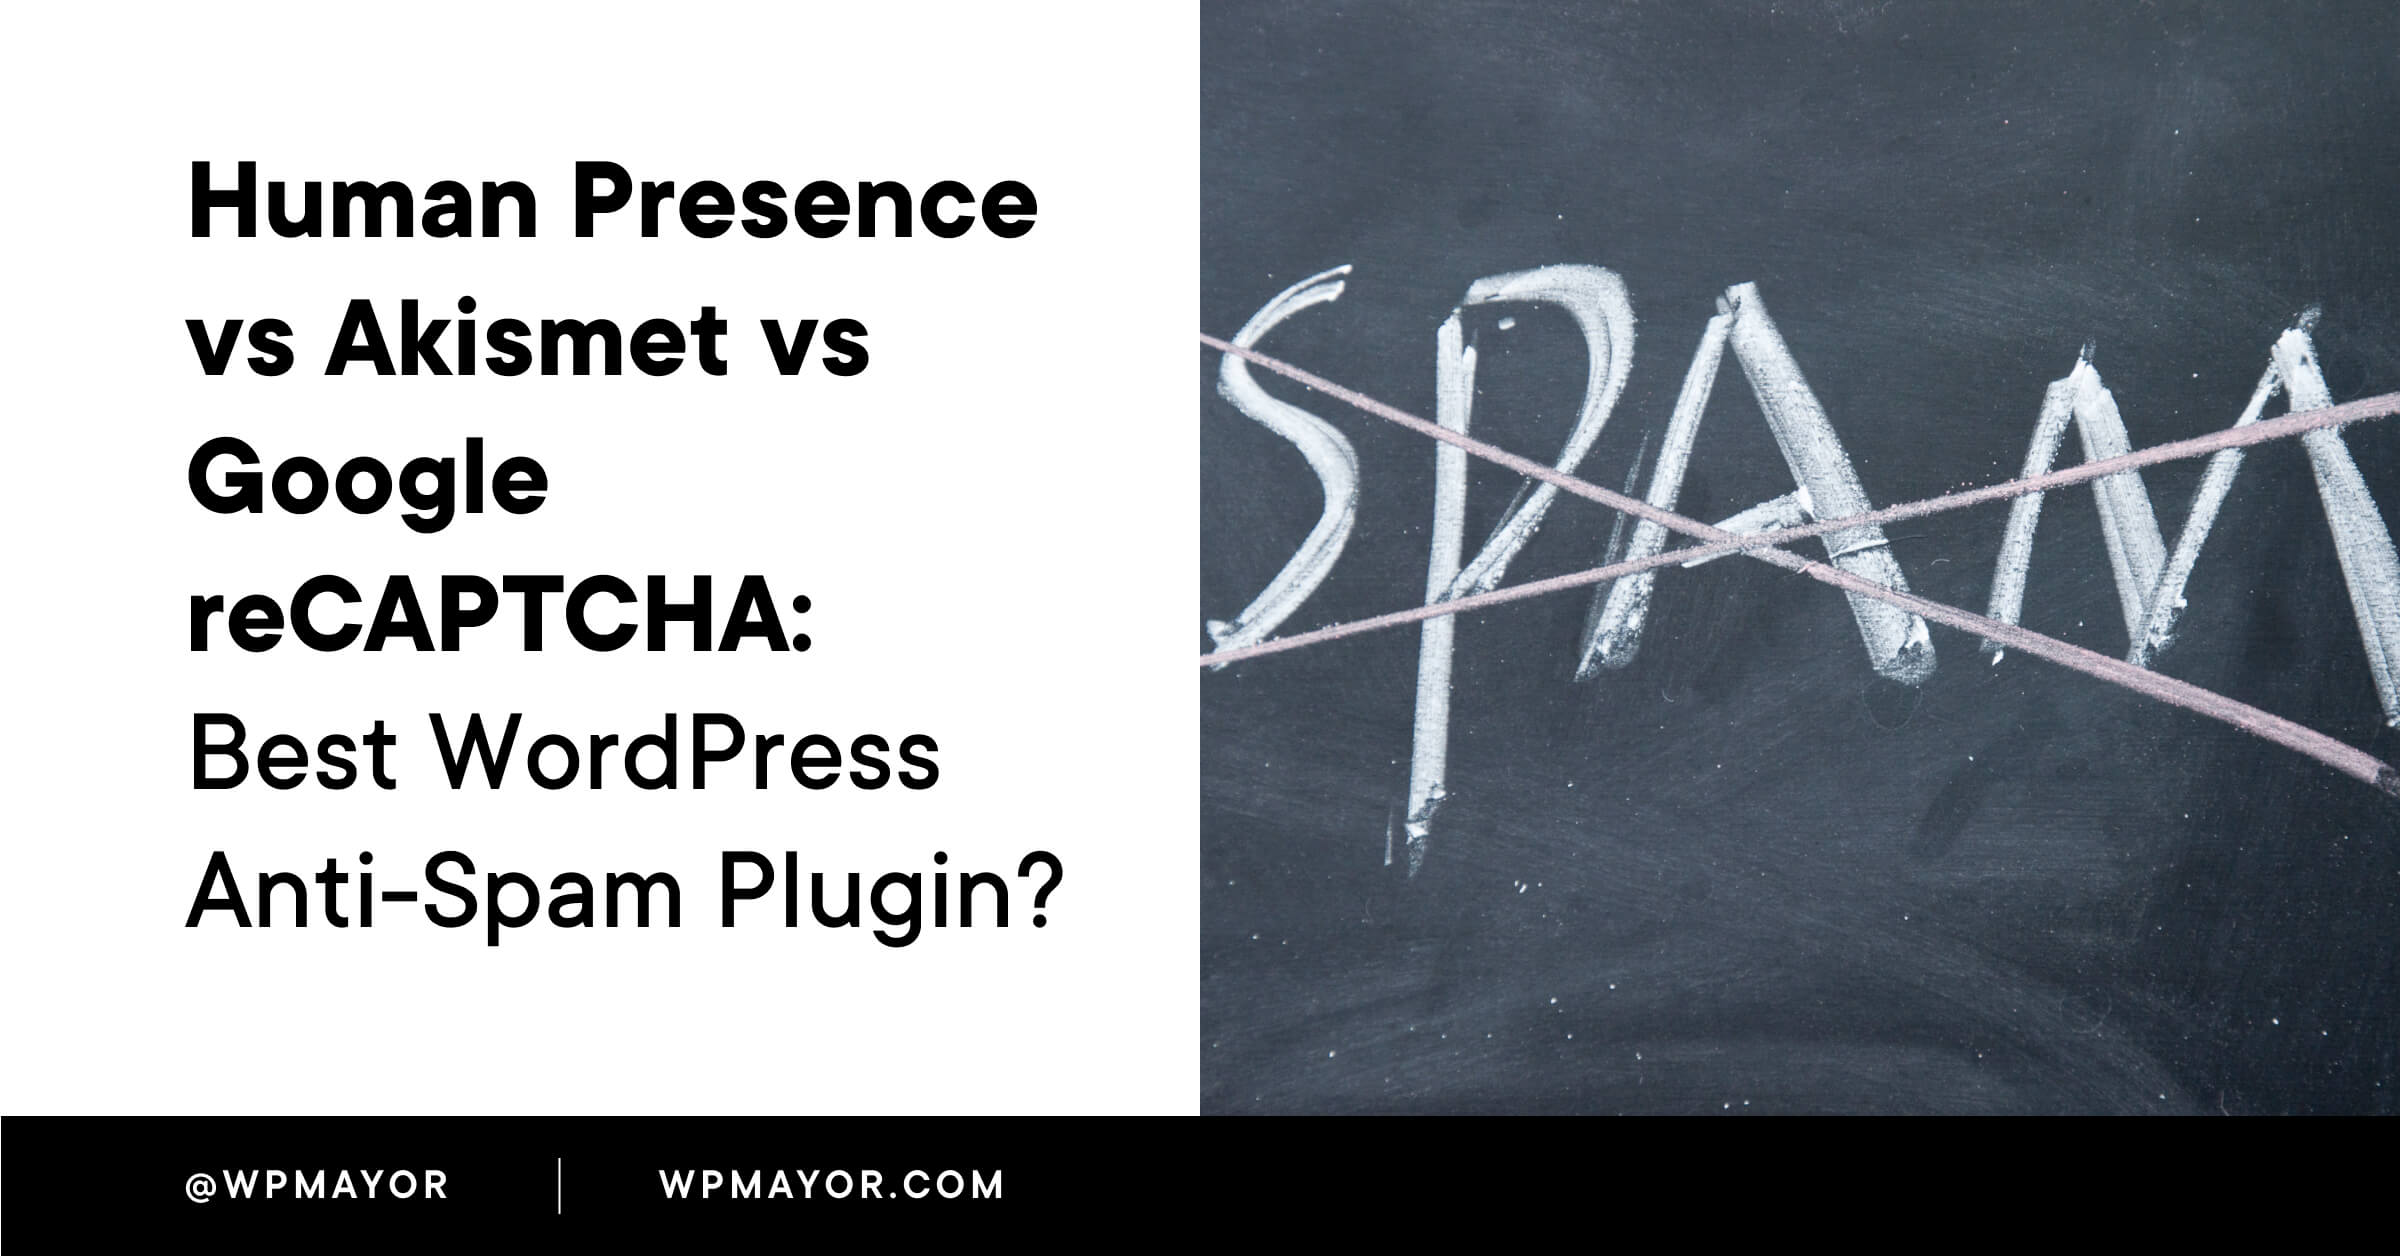 Human Presence vs Akismet vs Google reCAPTCHA per WordPress Spam